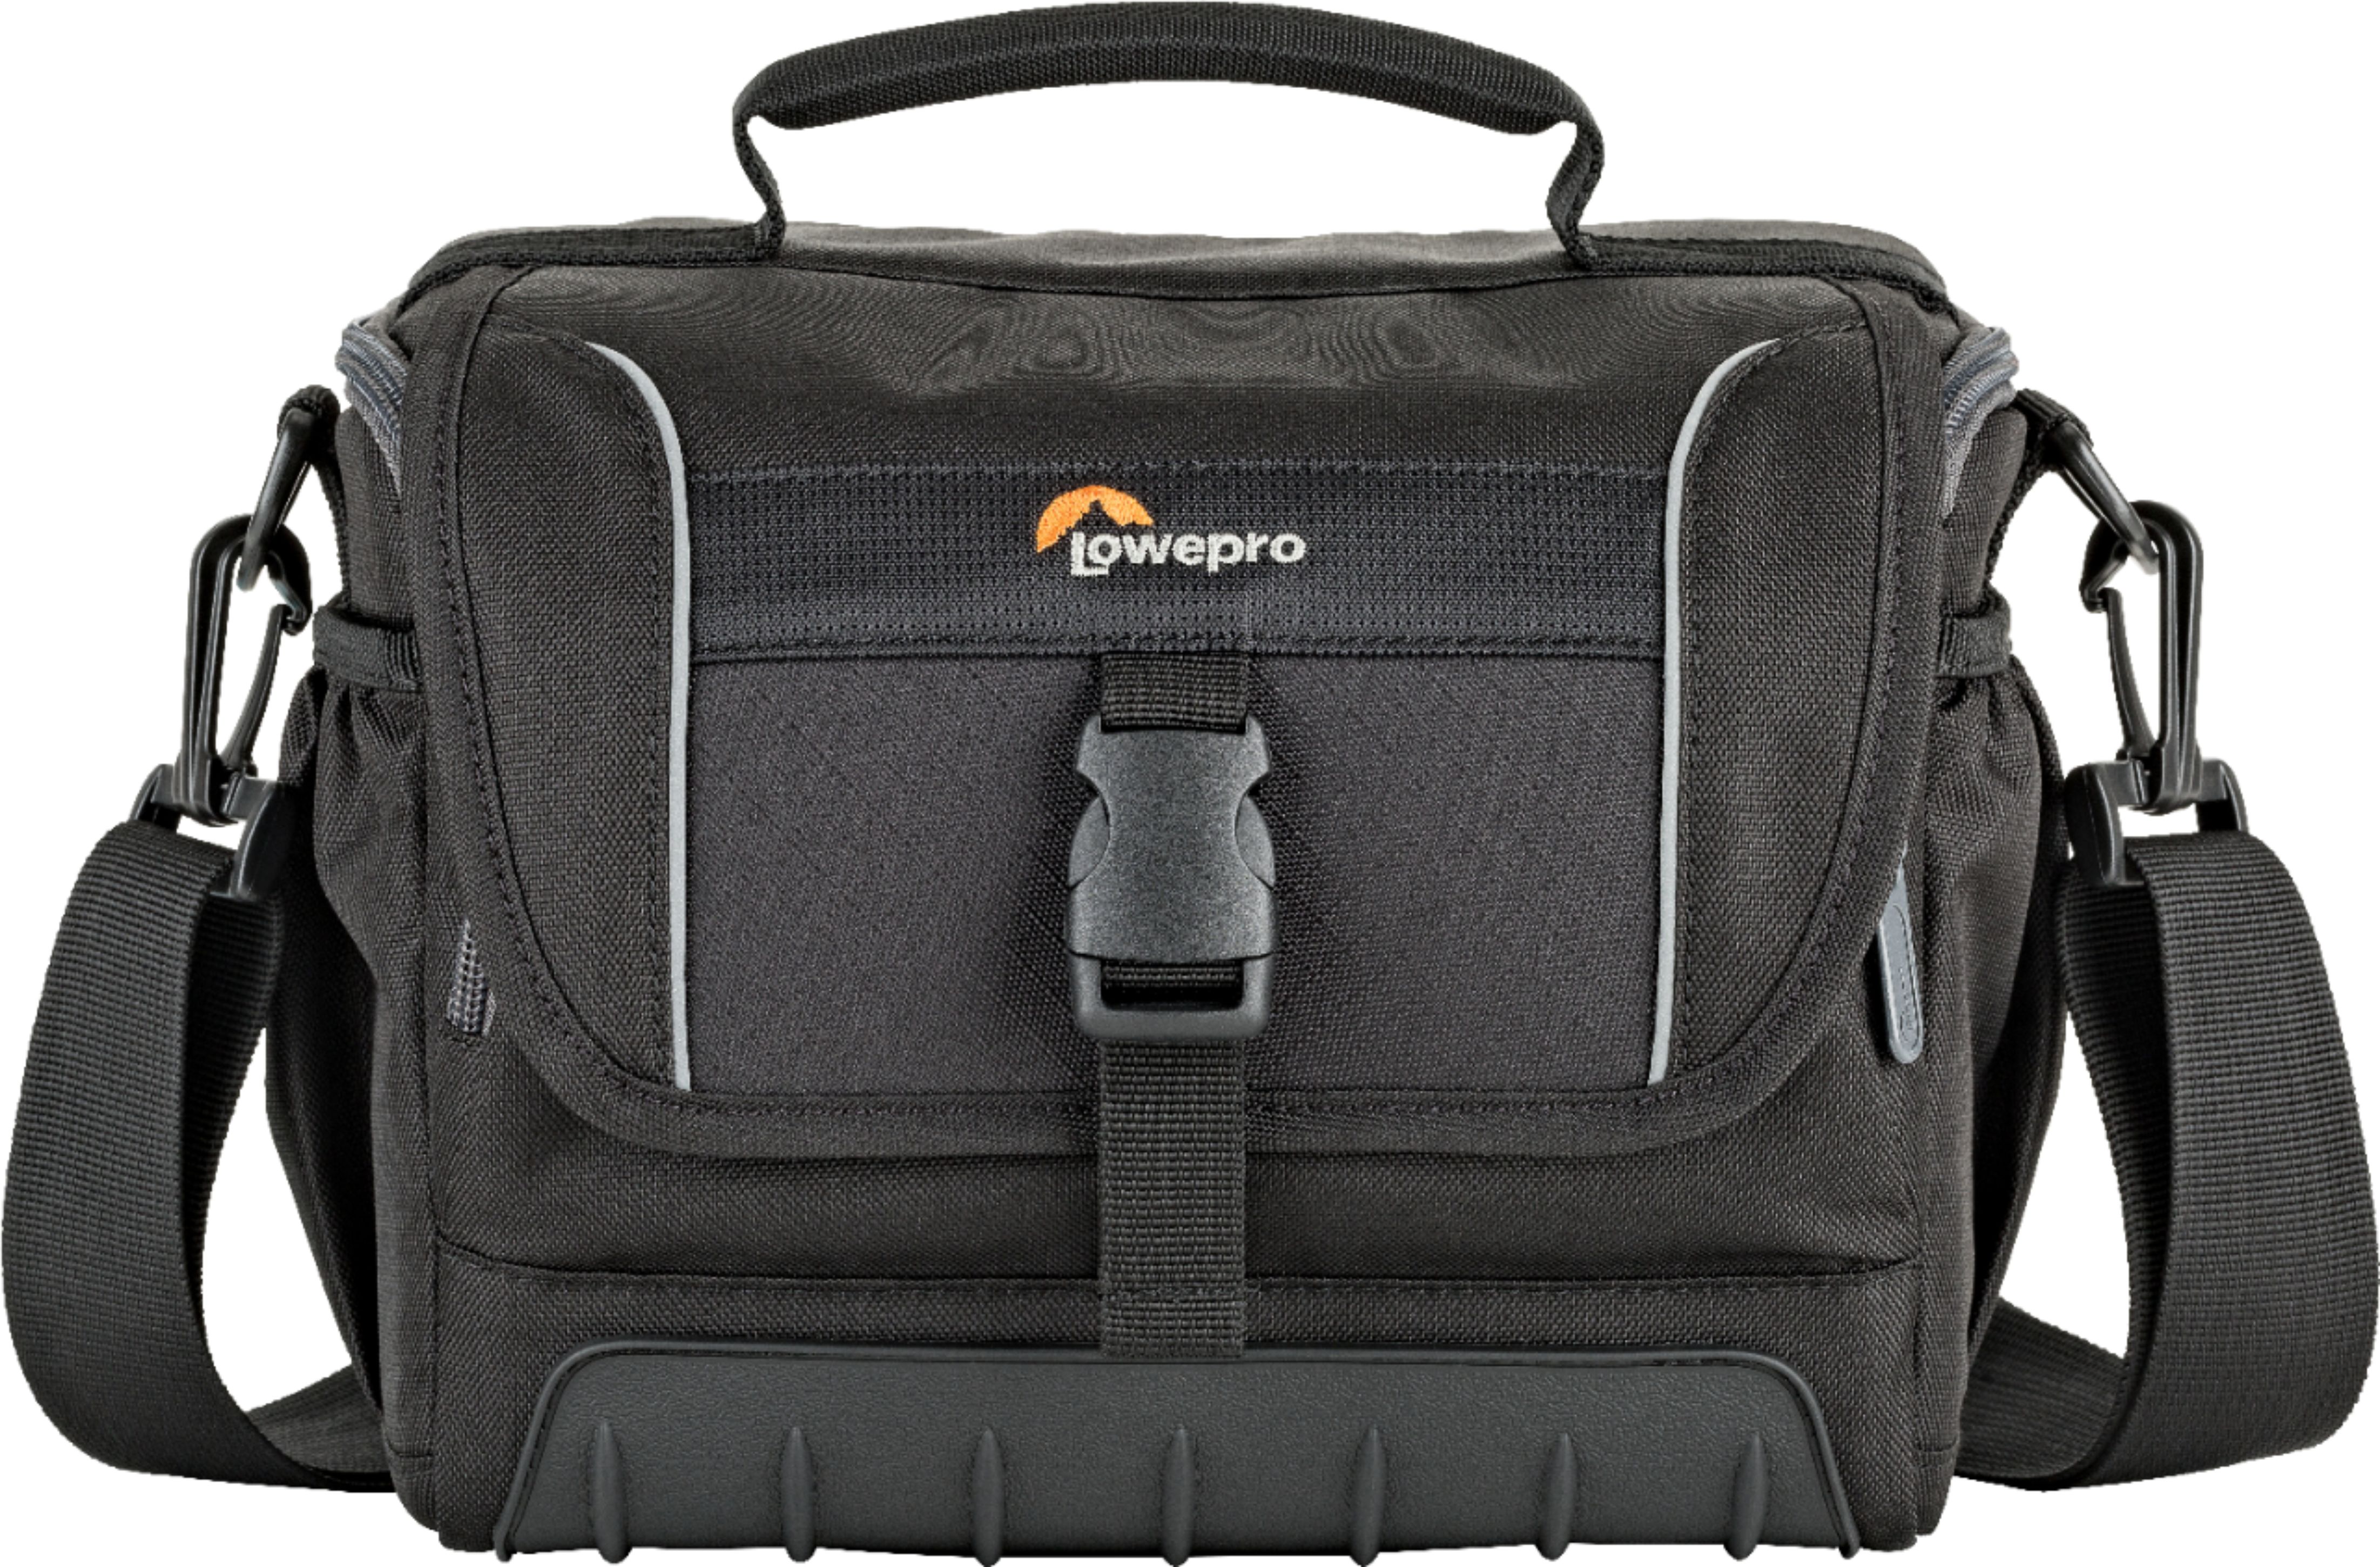 Lowepro - Adventura SH 160R II Camera Carrying Bag - Black